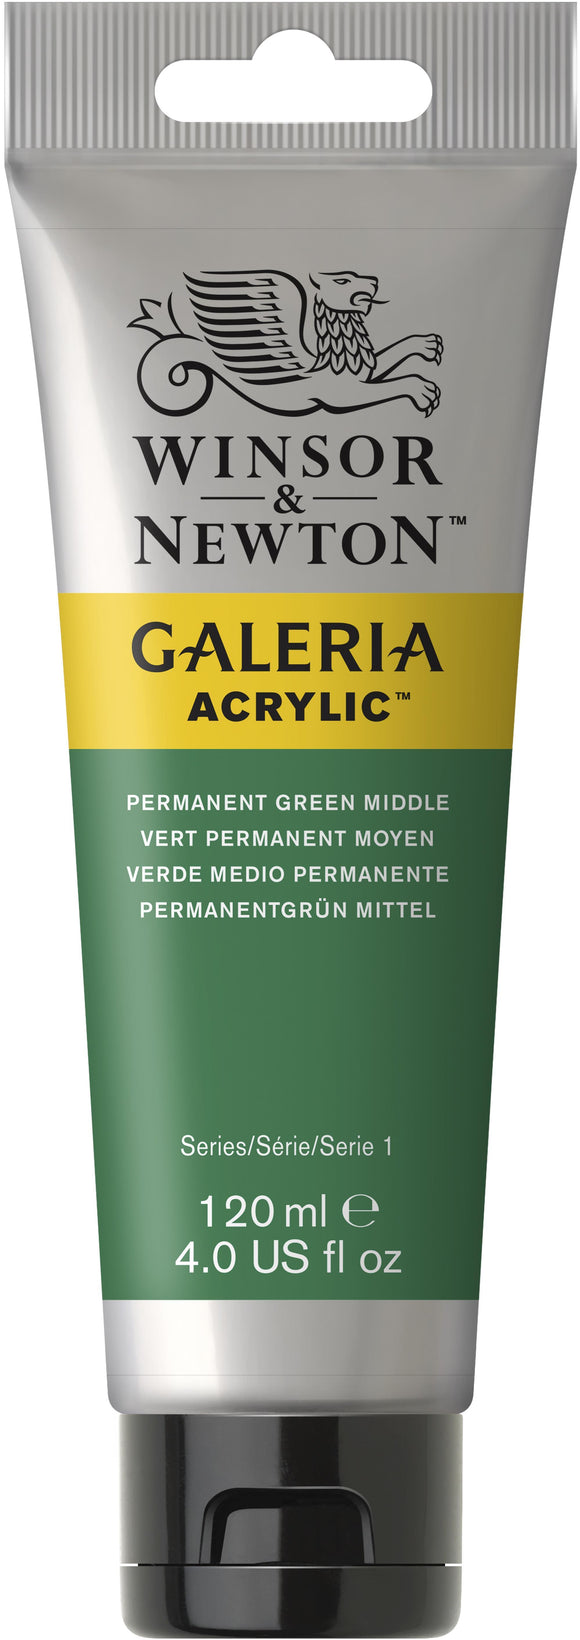 Winsor & Newton Galeria Acrylic Permanent Green Middle 120mL